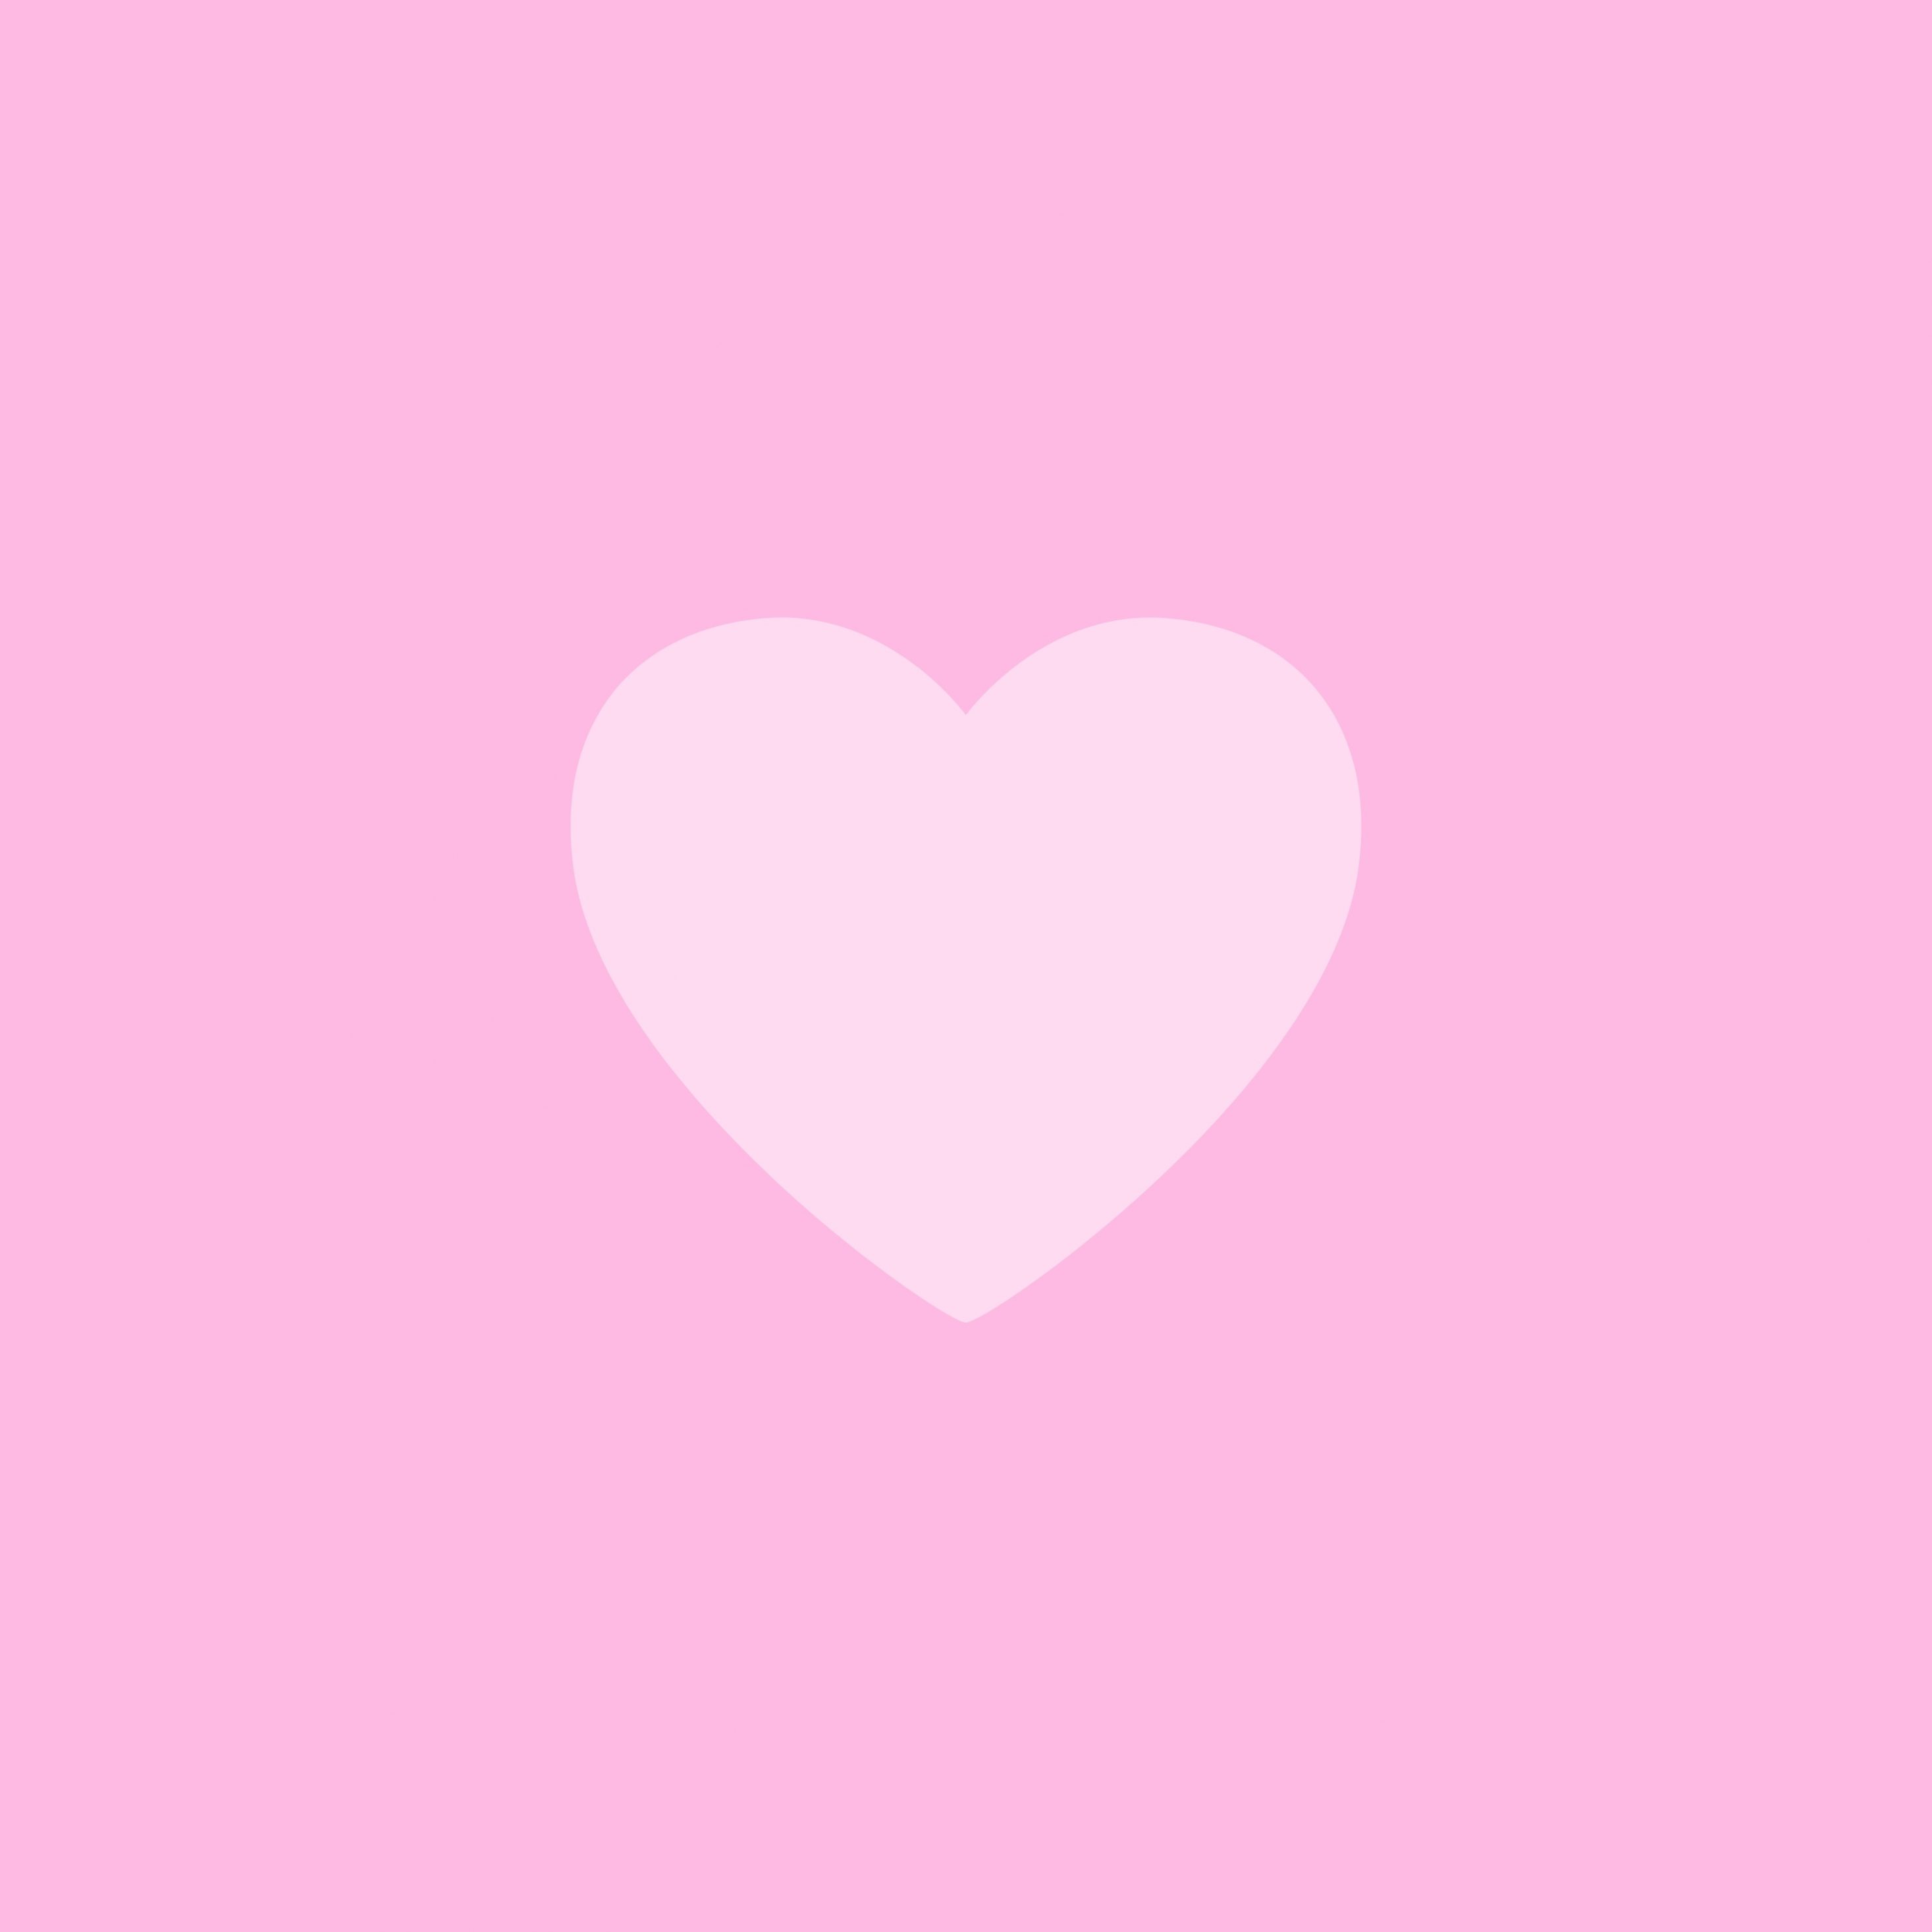 https://www.ipadwallpaper.org/wp-content/uploads/2021/01/Love-heart-pink-background-iPad-Wallpaper-2934x2934.jpg